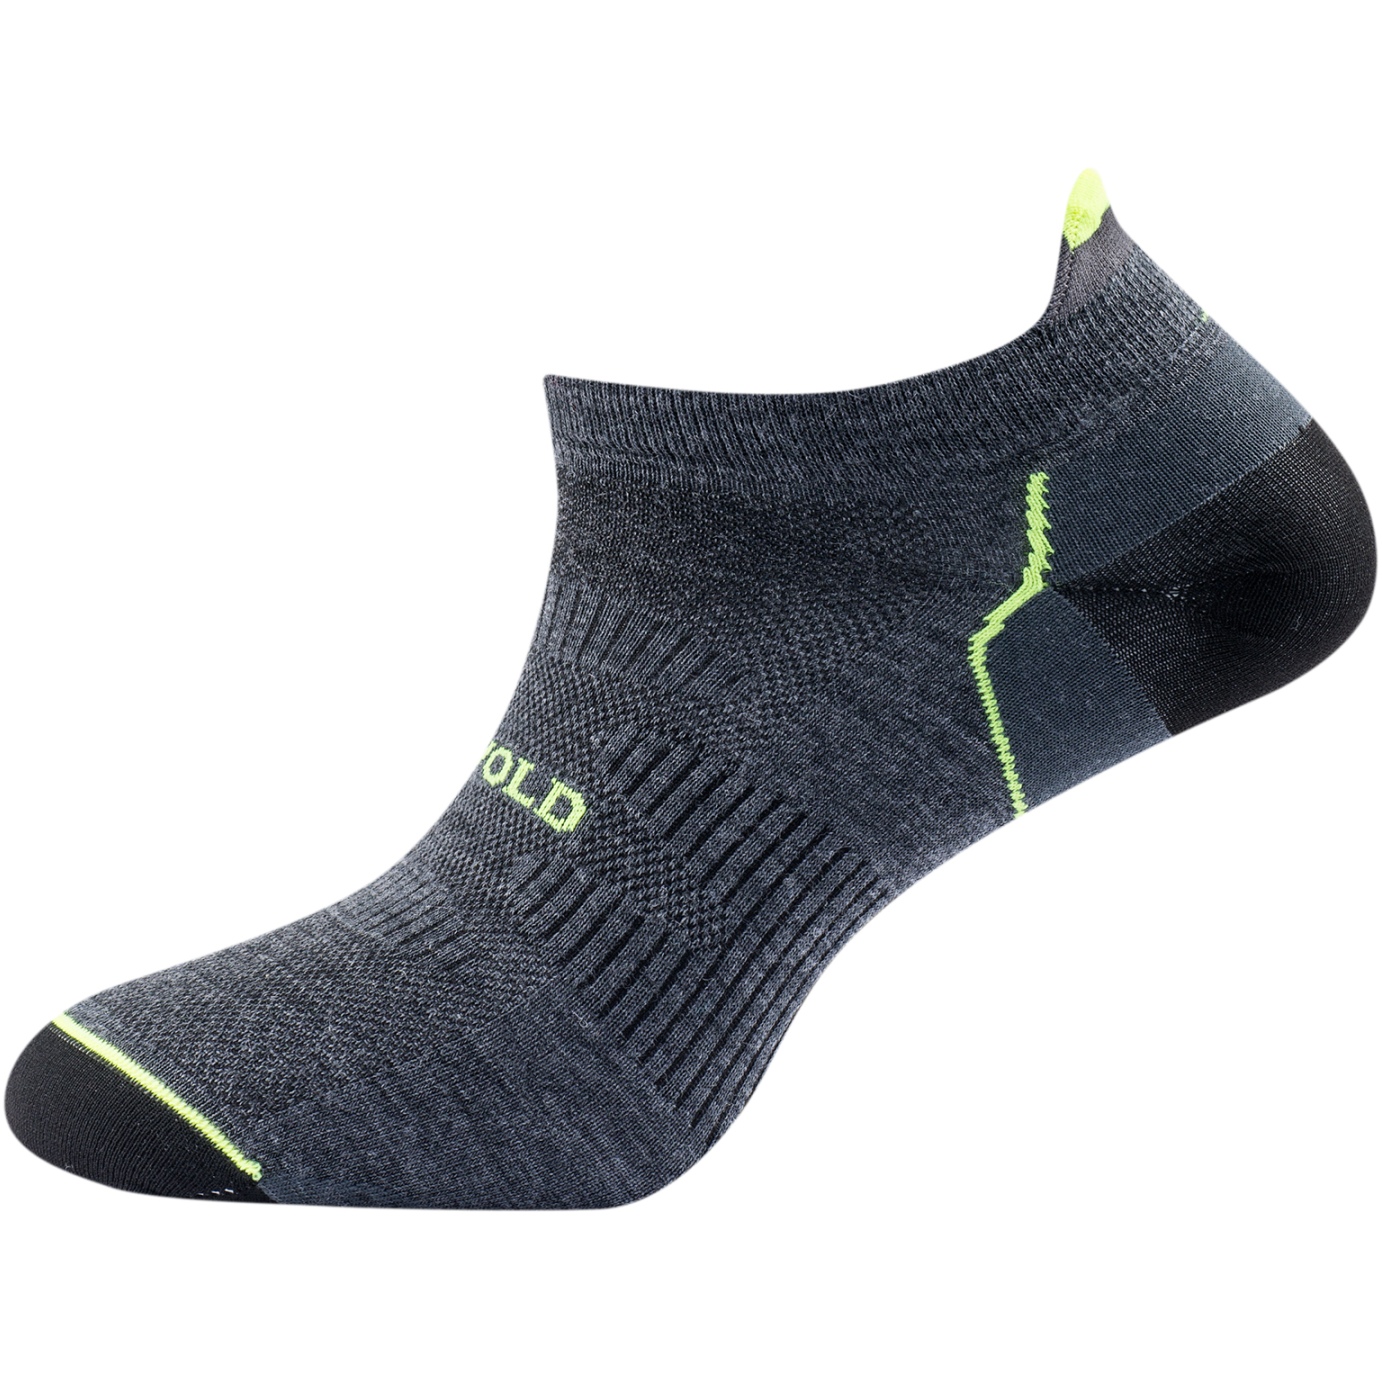 Image of Devold Running Merino Low Socks - 272A Dark Grey